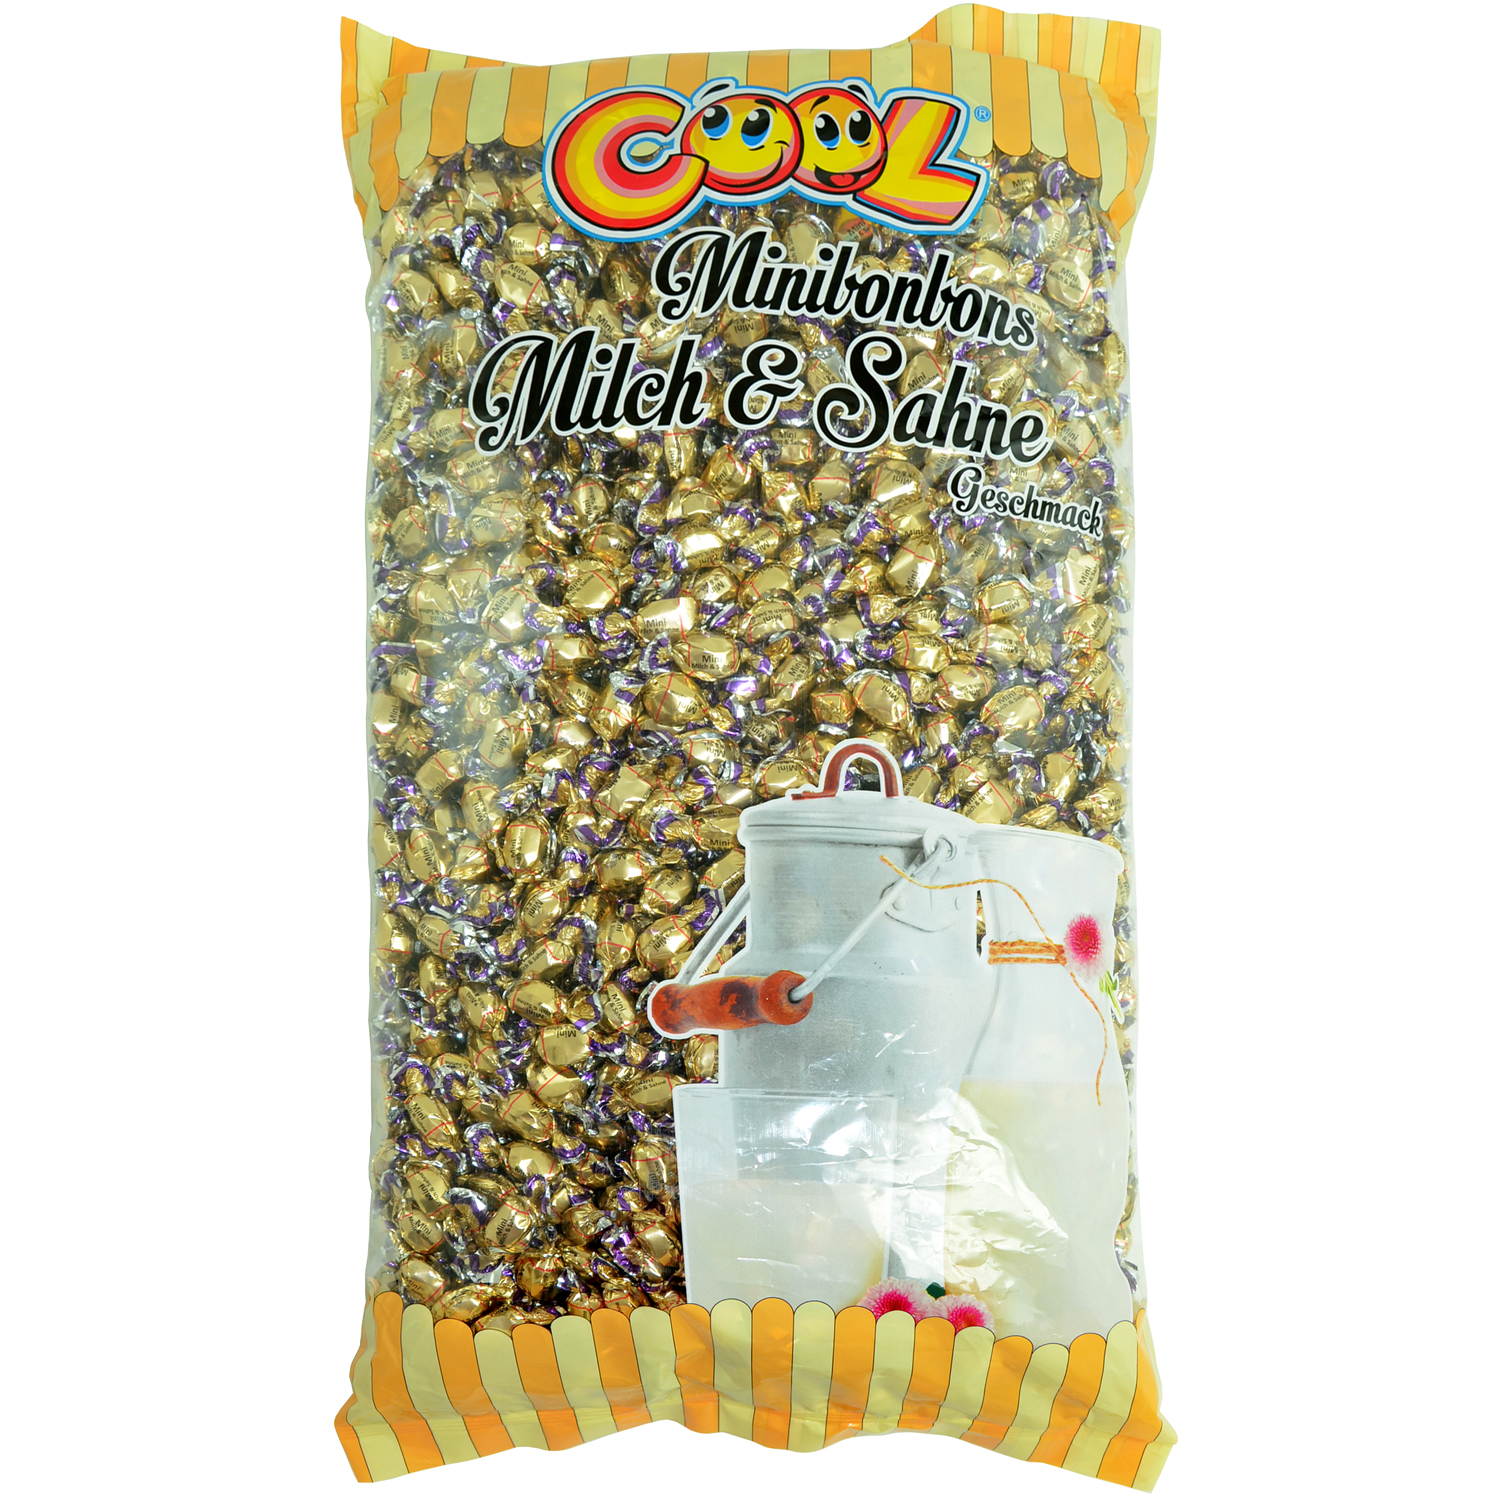 Cool Mini Bonbons Milch &amp; Sahne 3kg | Online kaufen im World of Sweets Shop